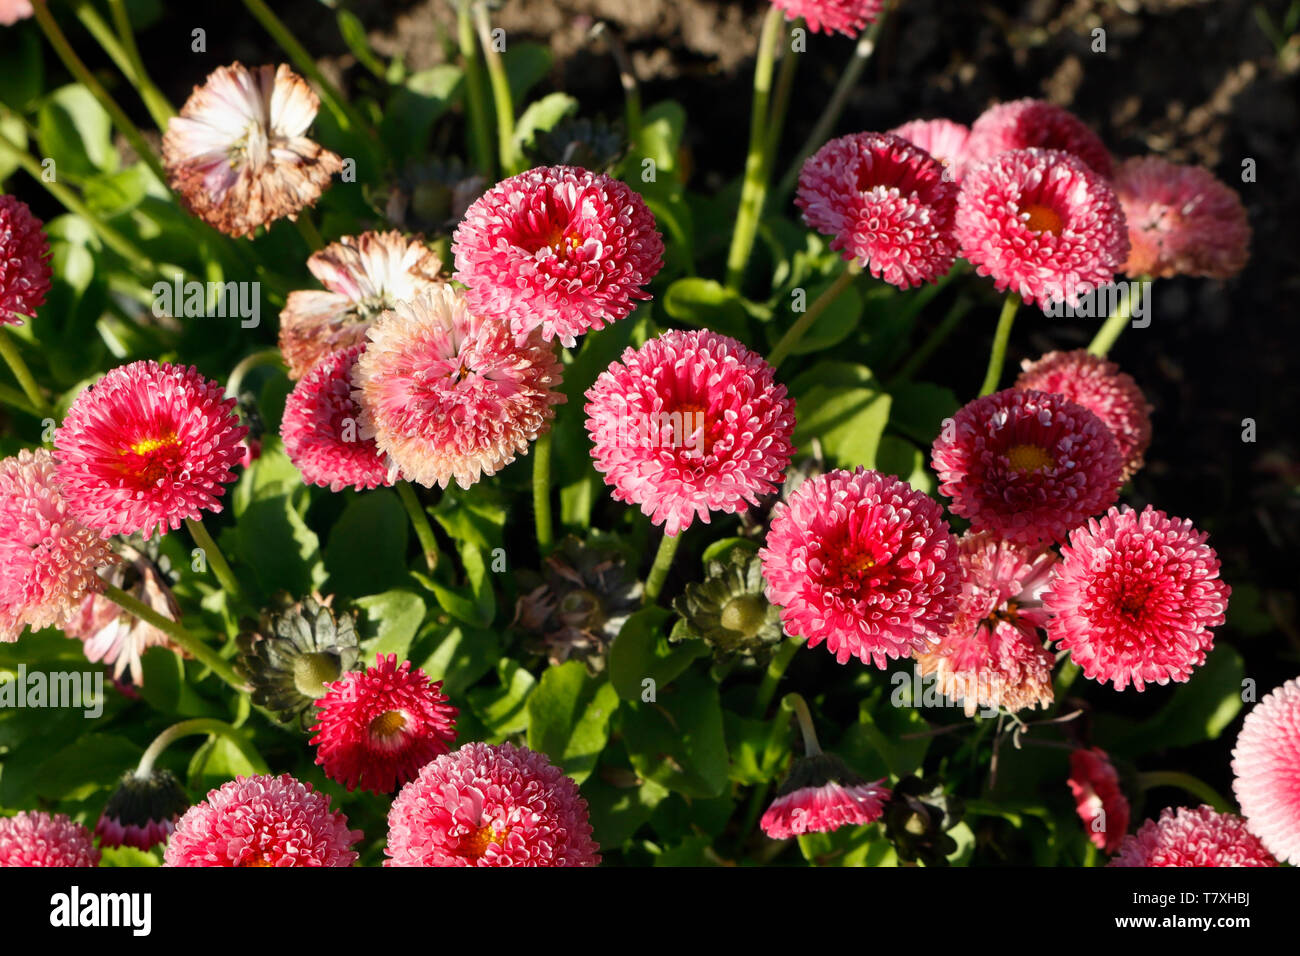 Bellis Perrenis, double flowered daisy. Pomponette, spring bedding plants flowers Stock Photo